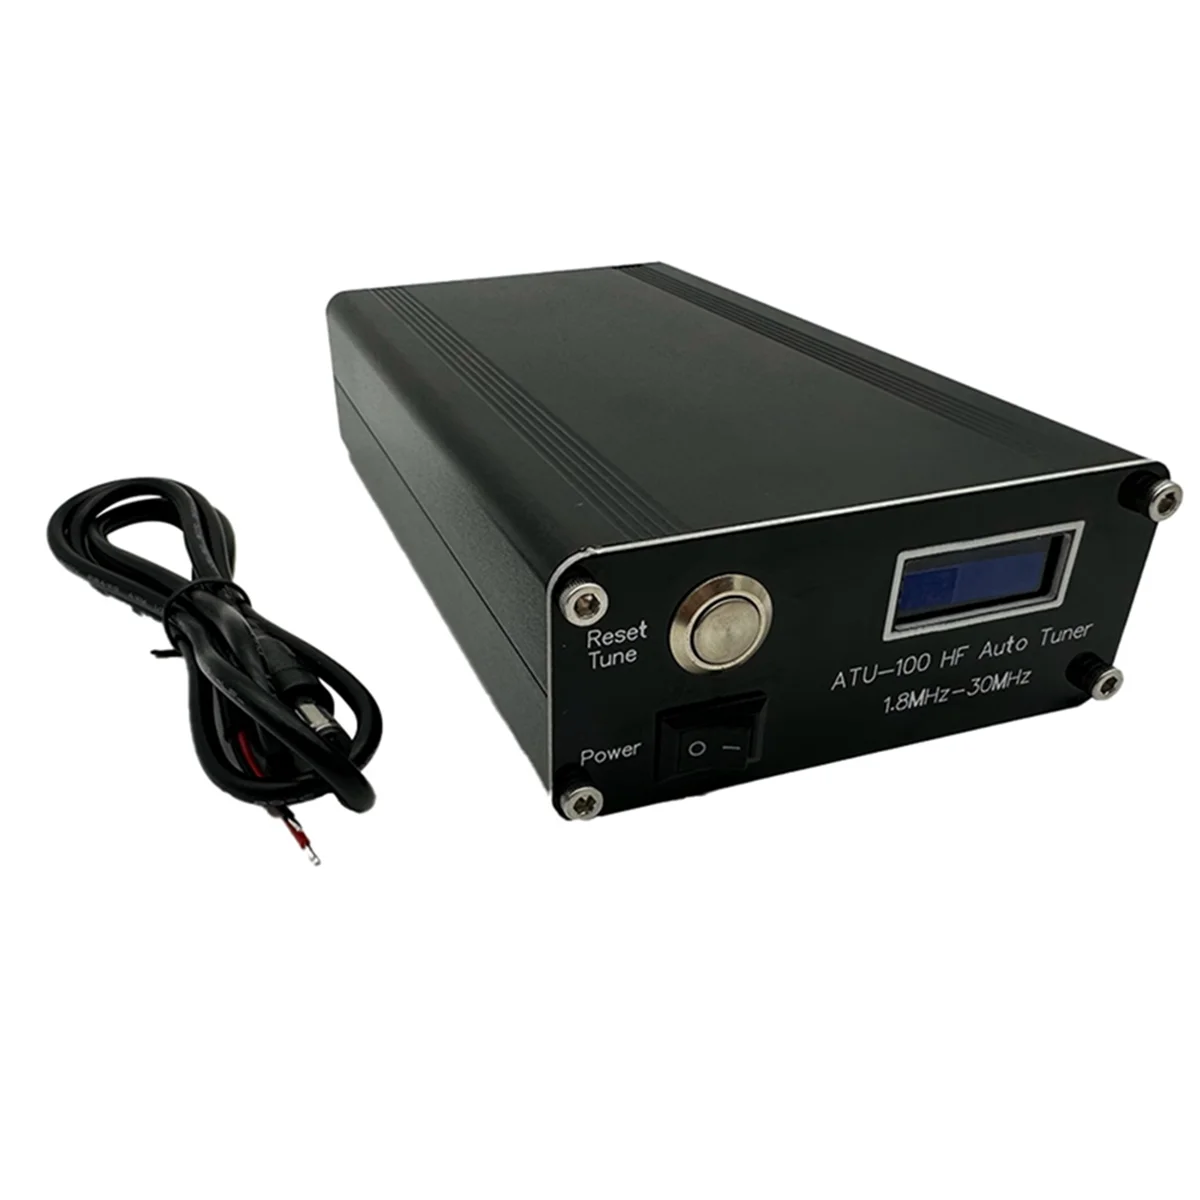 

ATU-100 Auto Tm DIY Open Source N7Ddc Amateur Radio Communication Multi-Functional Portable Shortwave Stations